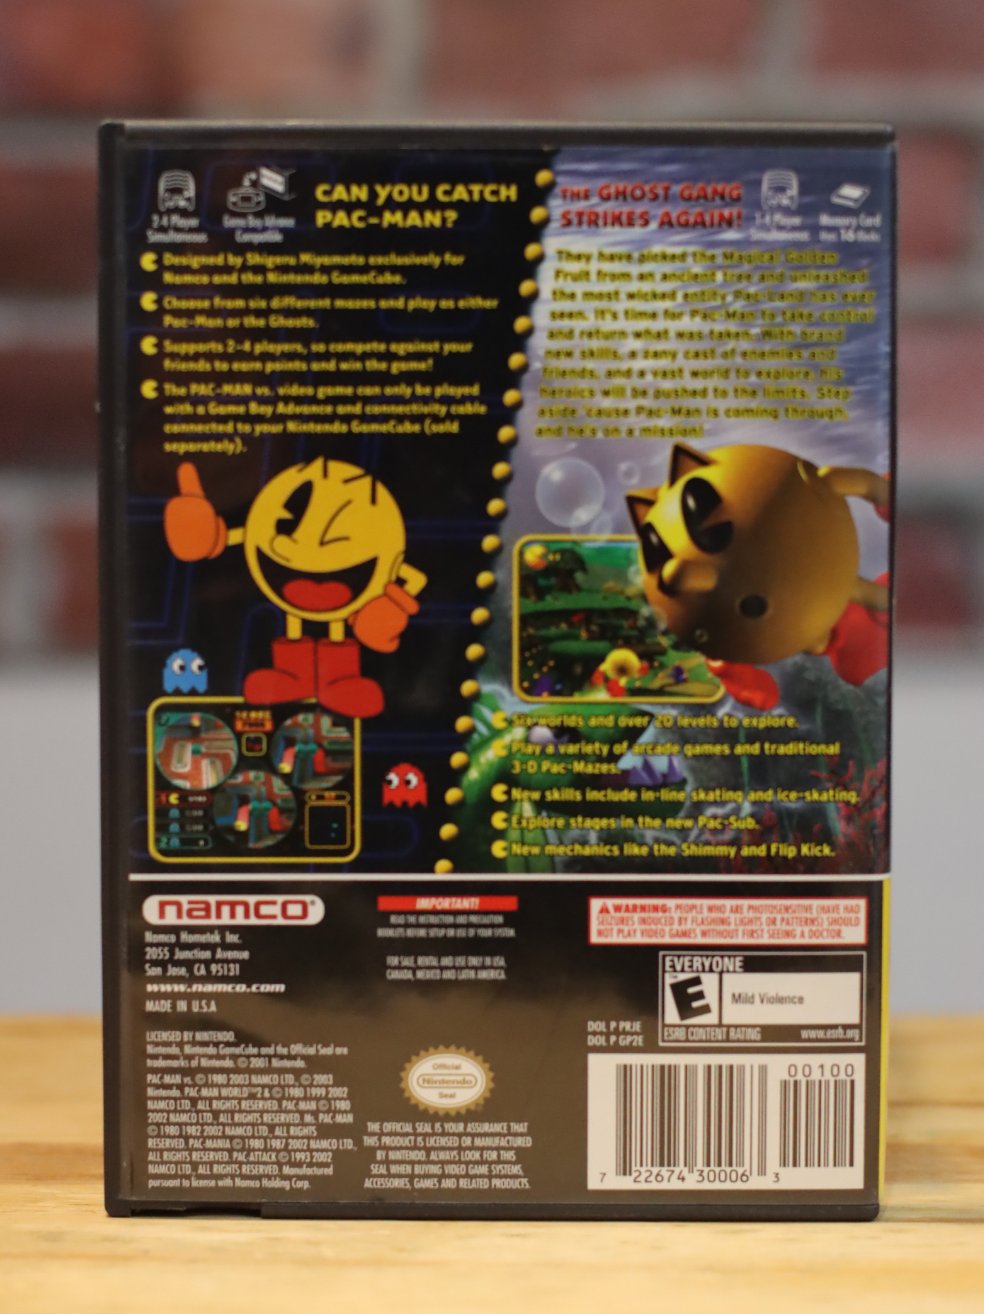 Pac-Man VS Pac-Man World 2 Nintendo Game Cube Complete